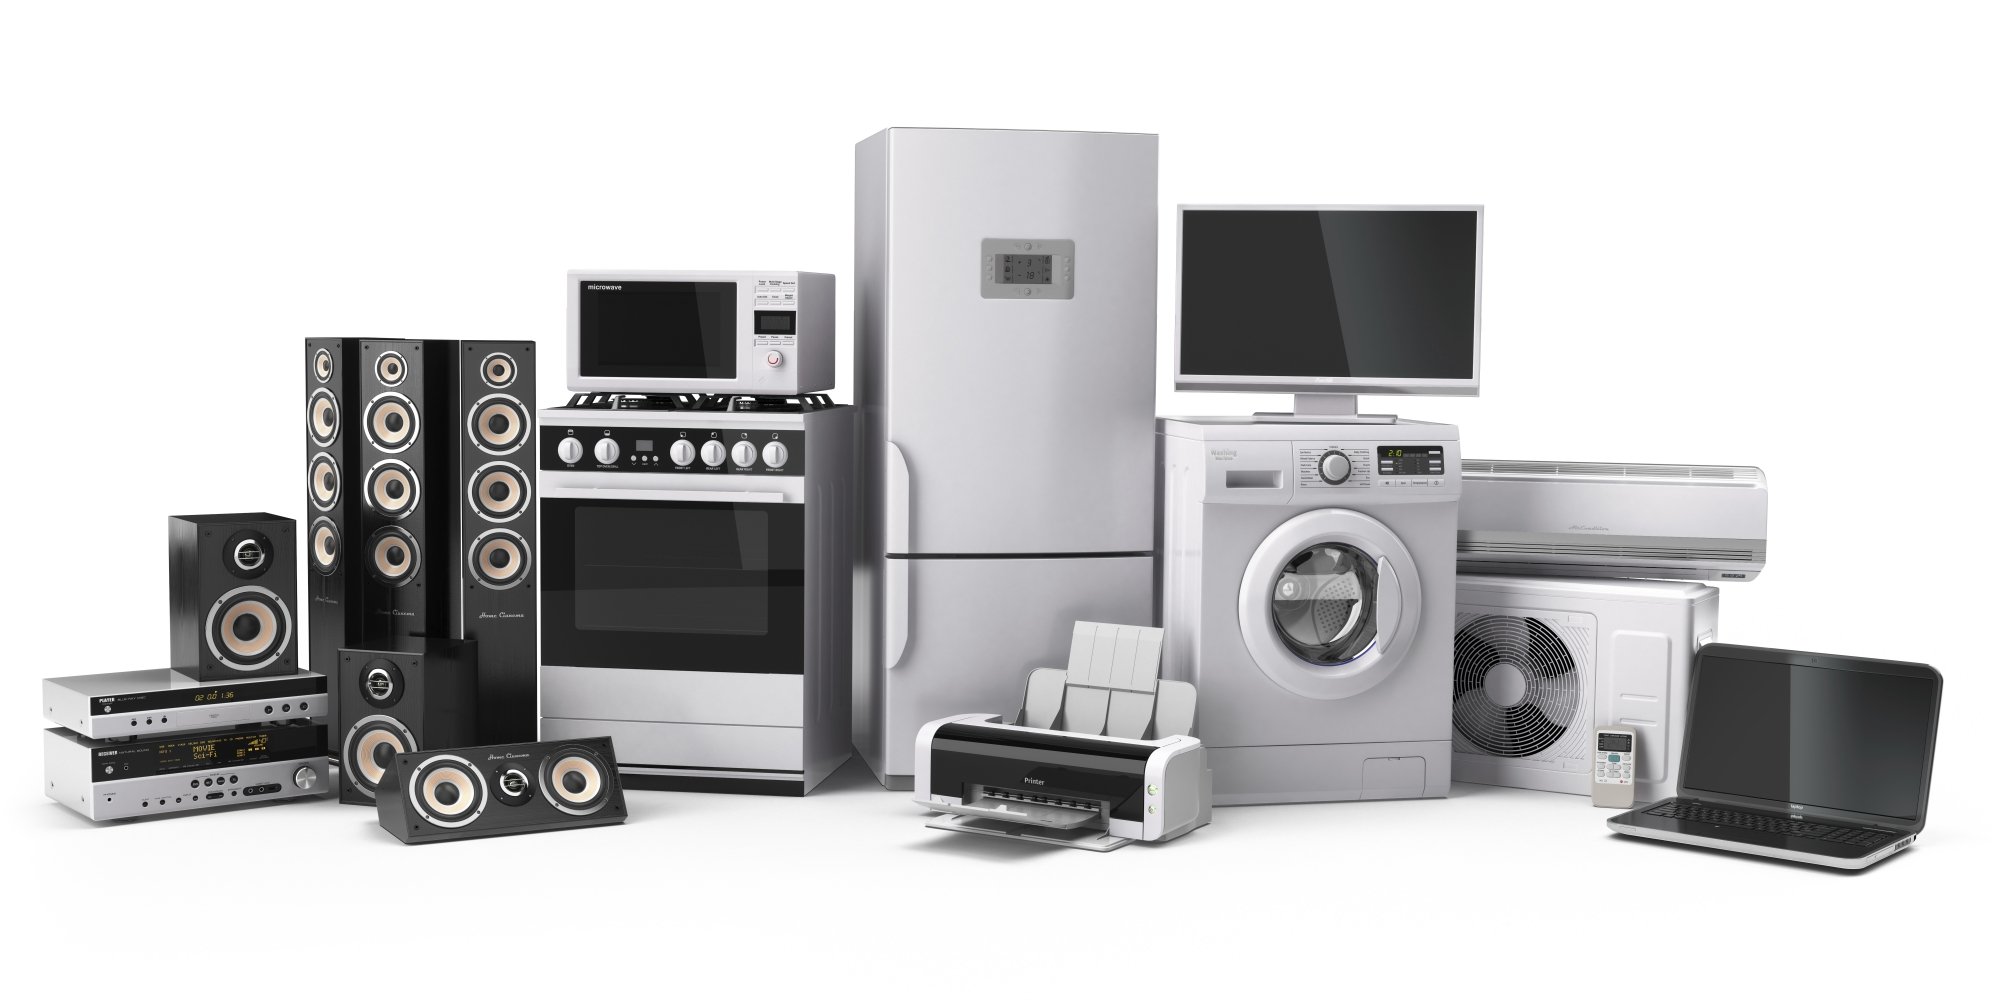 Household Appliances Useful Home Appliances List With Pictures 7esl Home Appliances Household Appliances Luxury Appliances